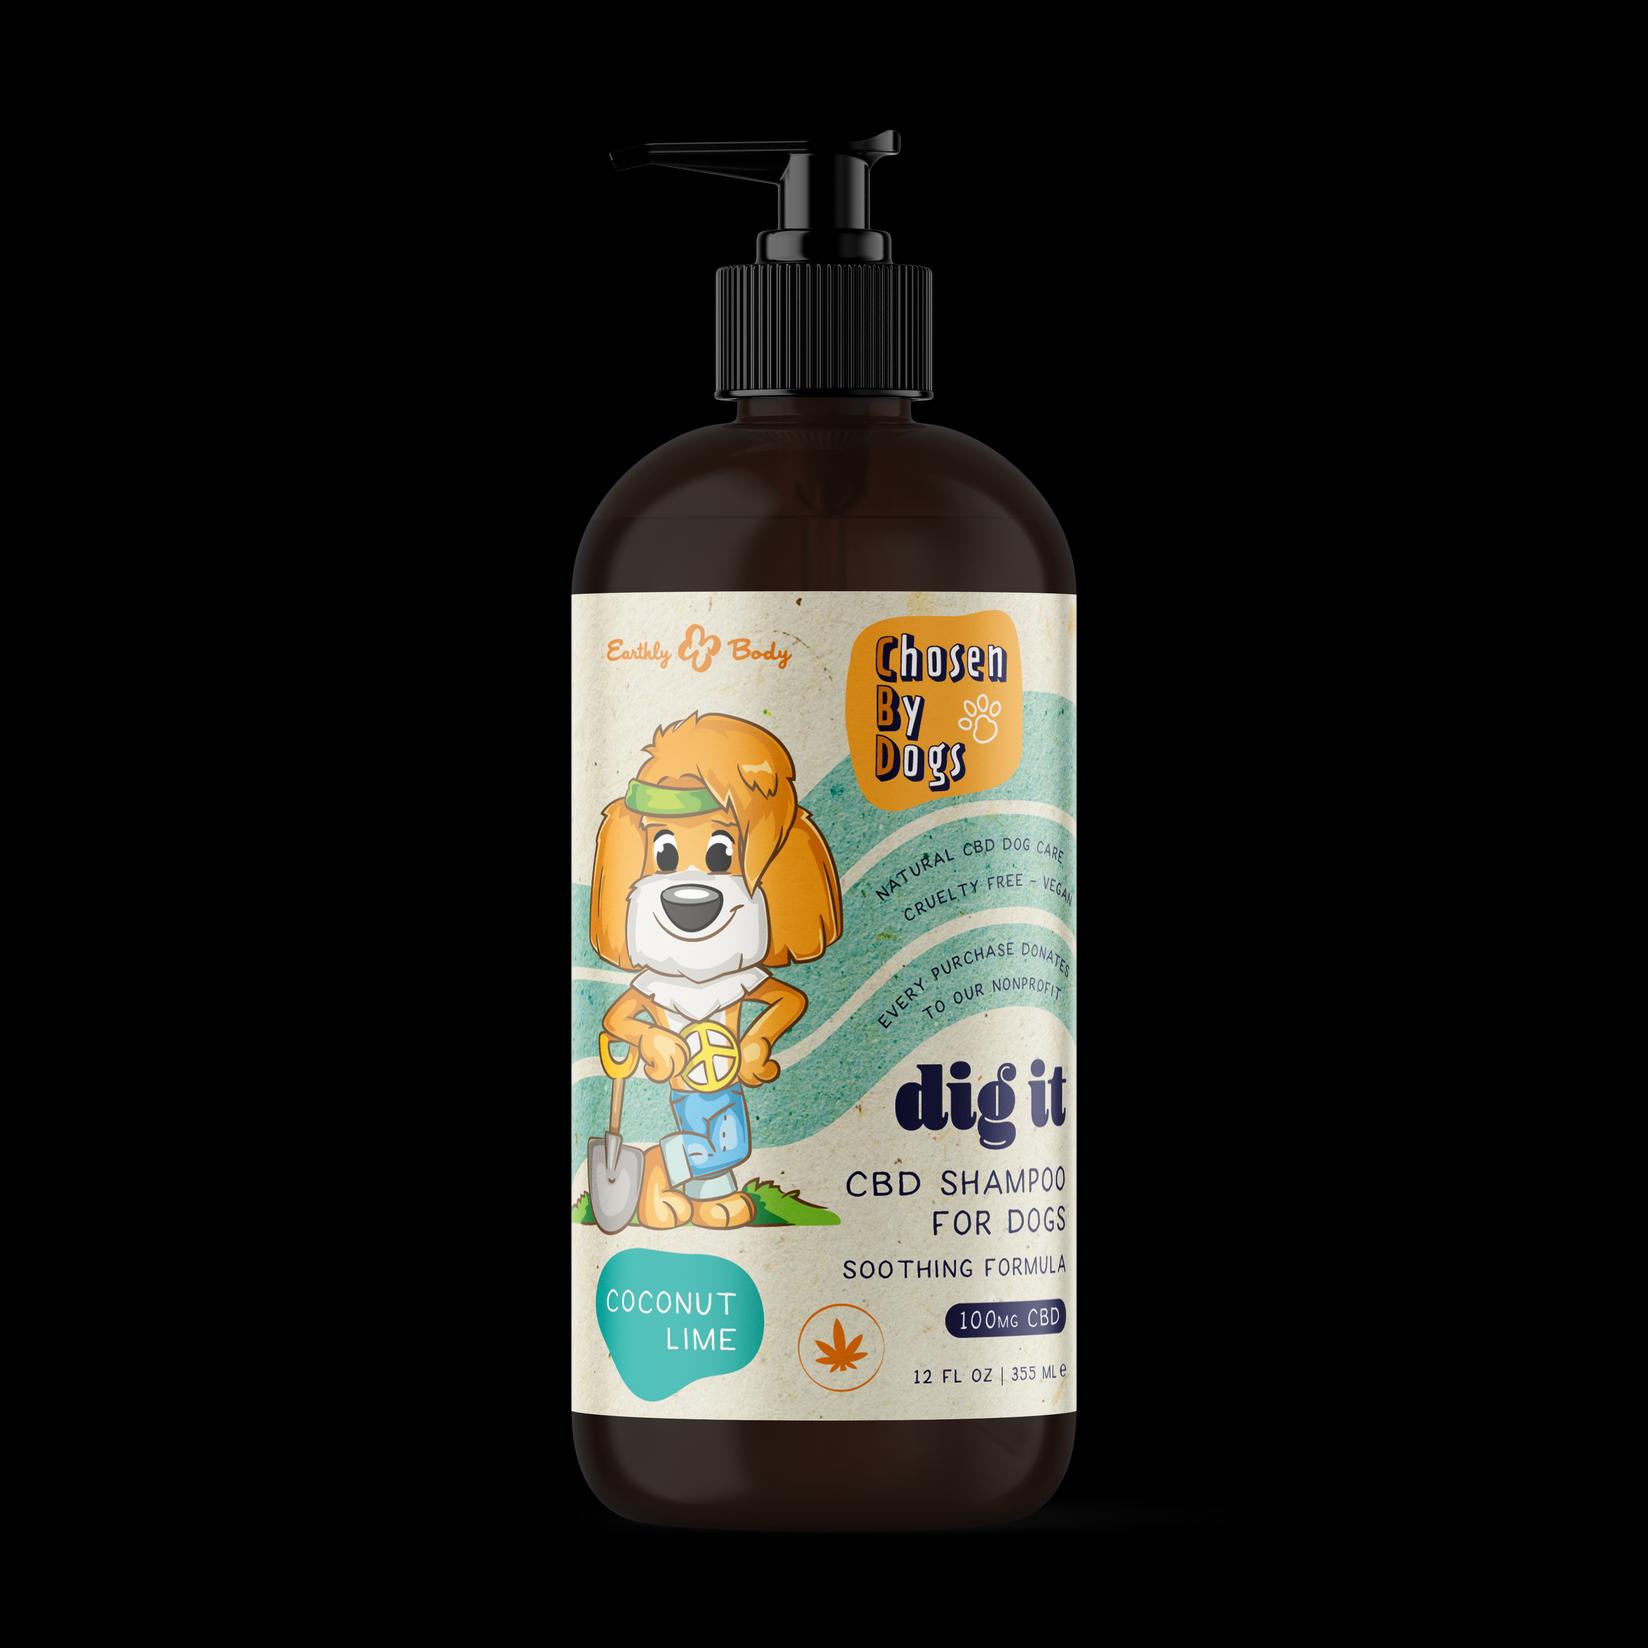 DIG IT CBD Shampoo for dogs -  Šampon za pse, soothing formula